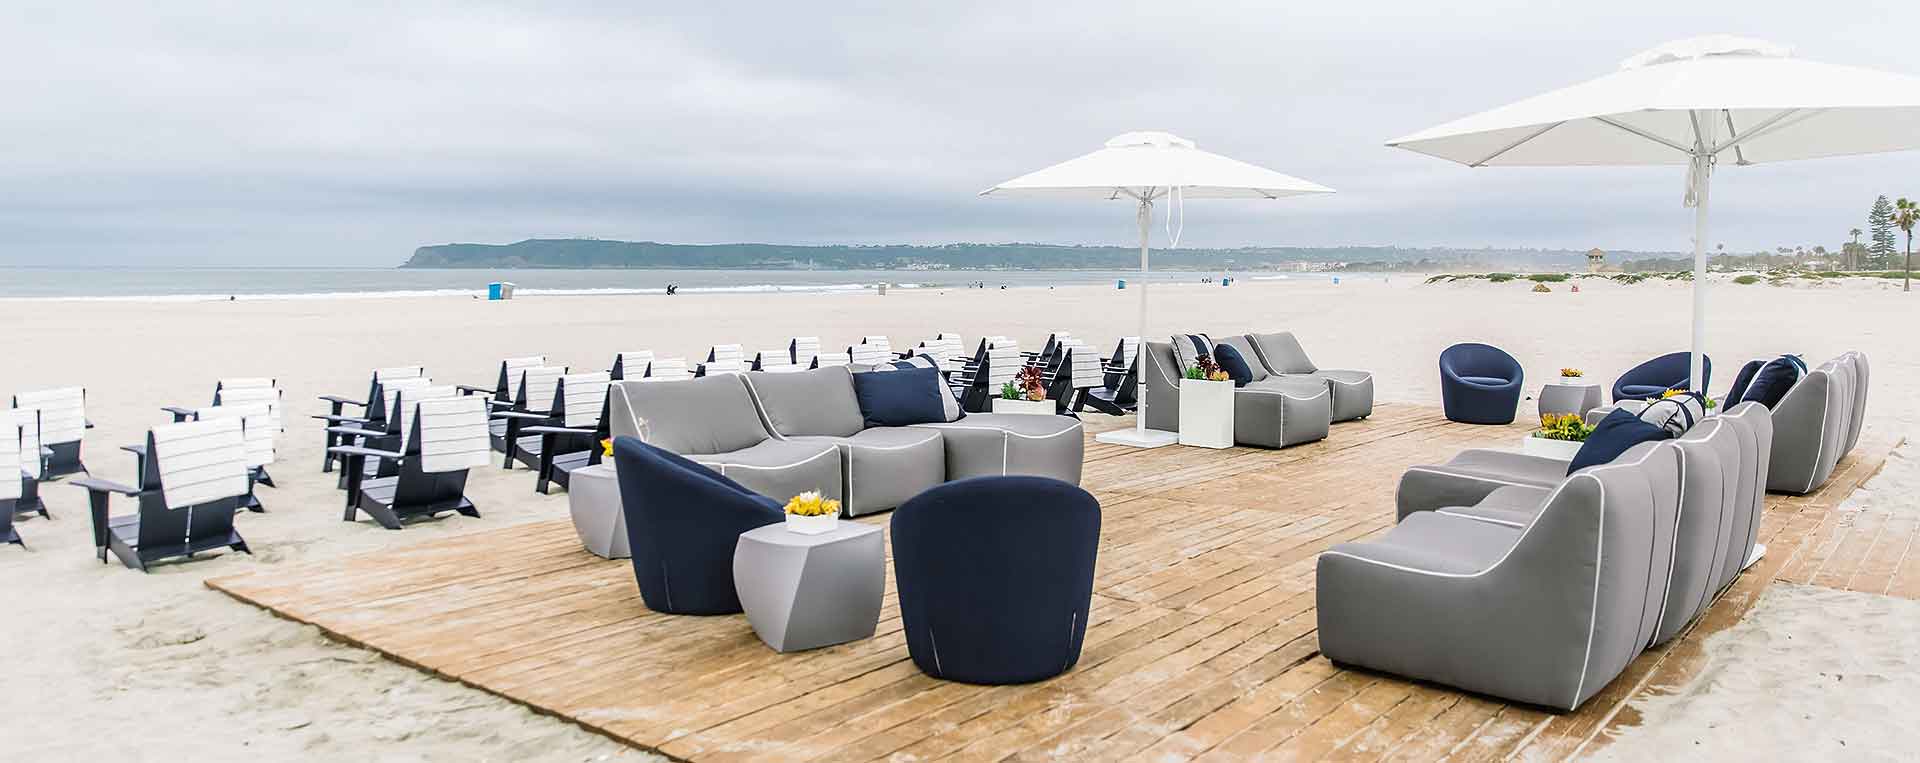 Windsor Beach Club with Room & Board furniture